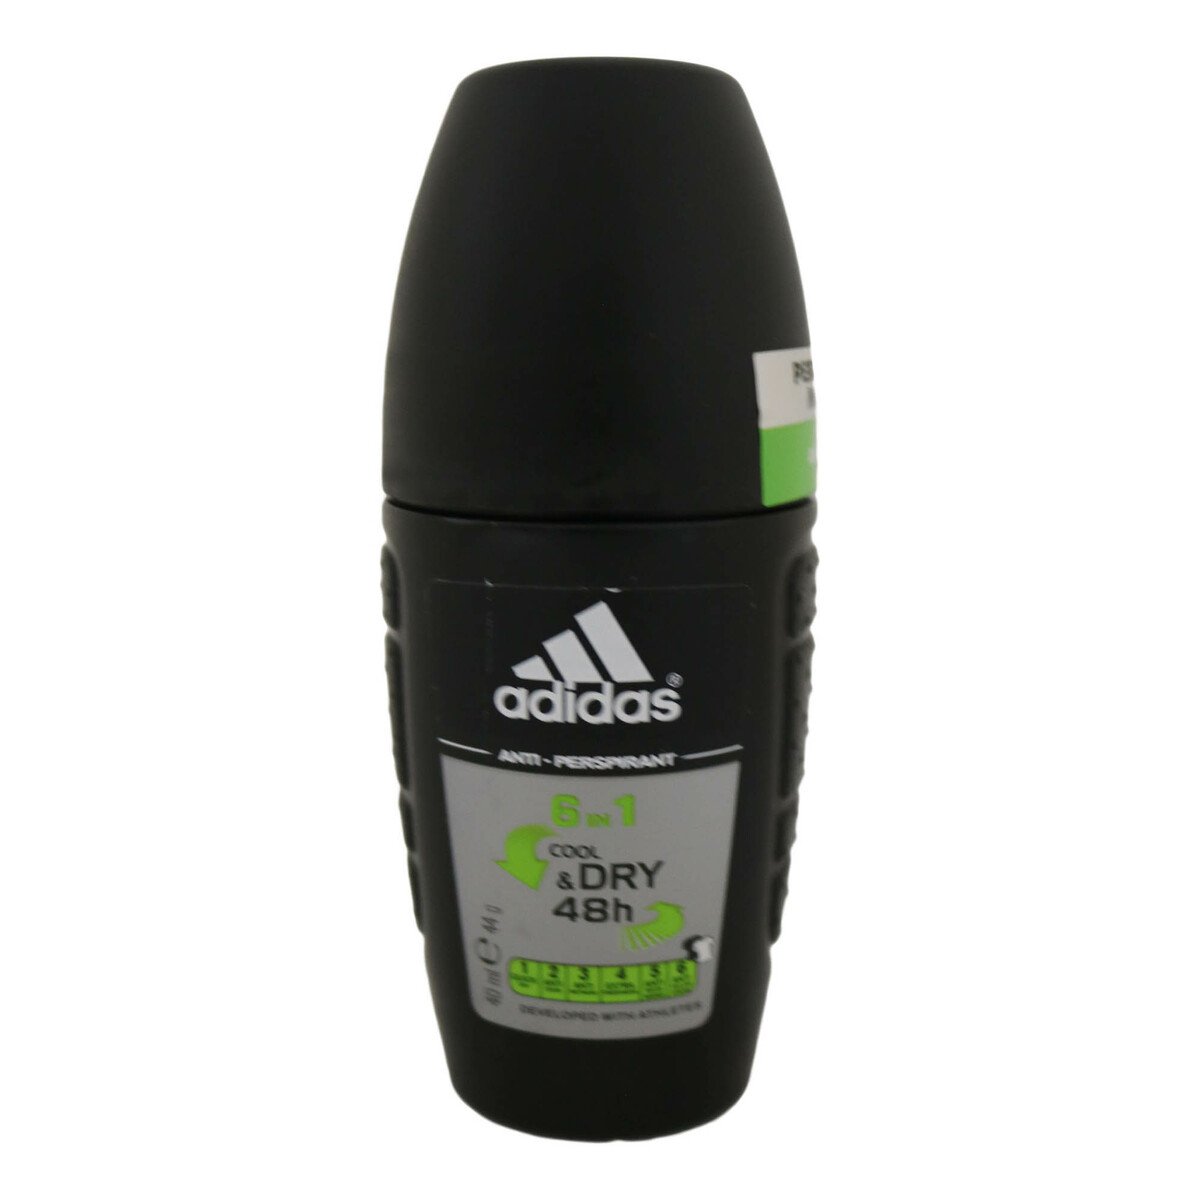 Adidas Men Deodorant Roll-On Cool & Dry 6In1 40ml